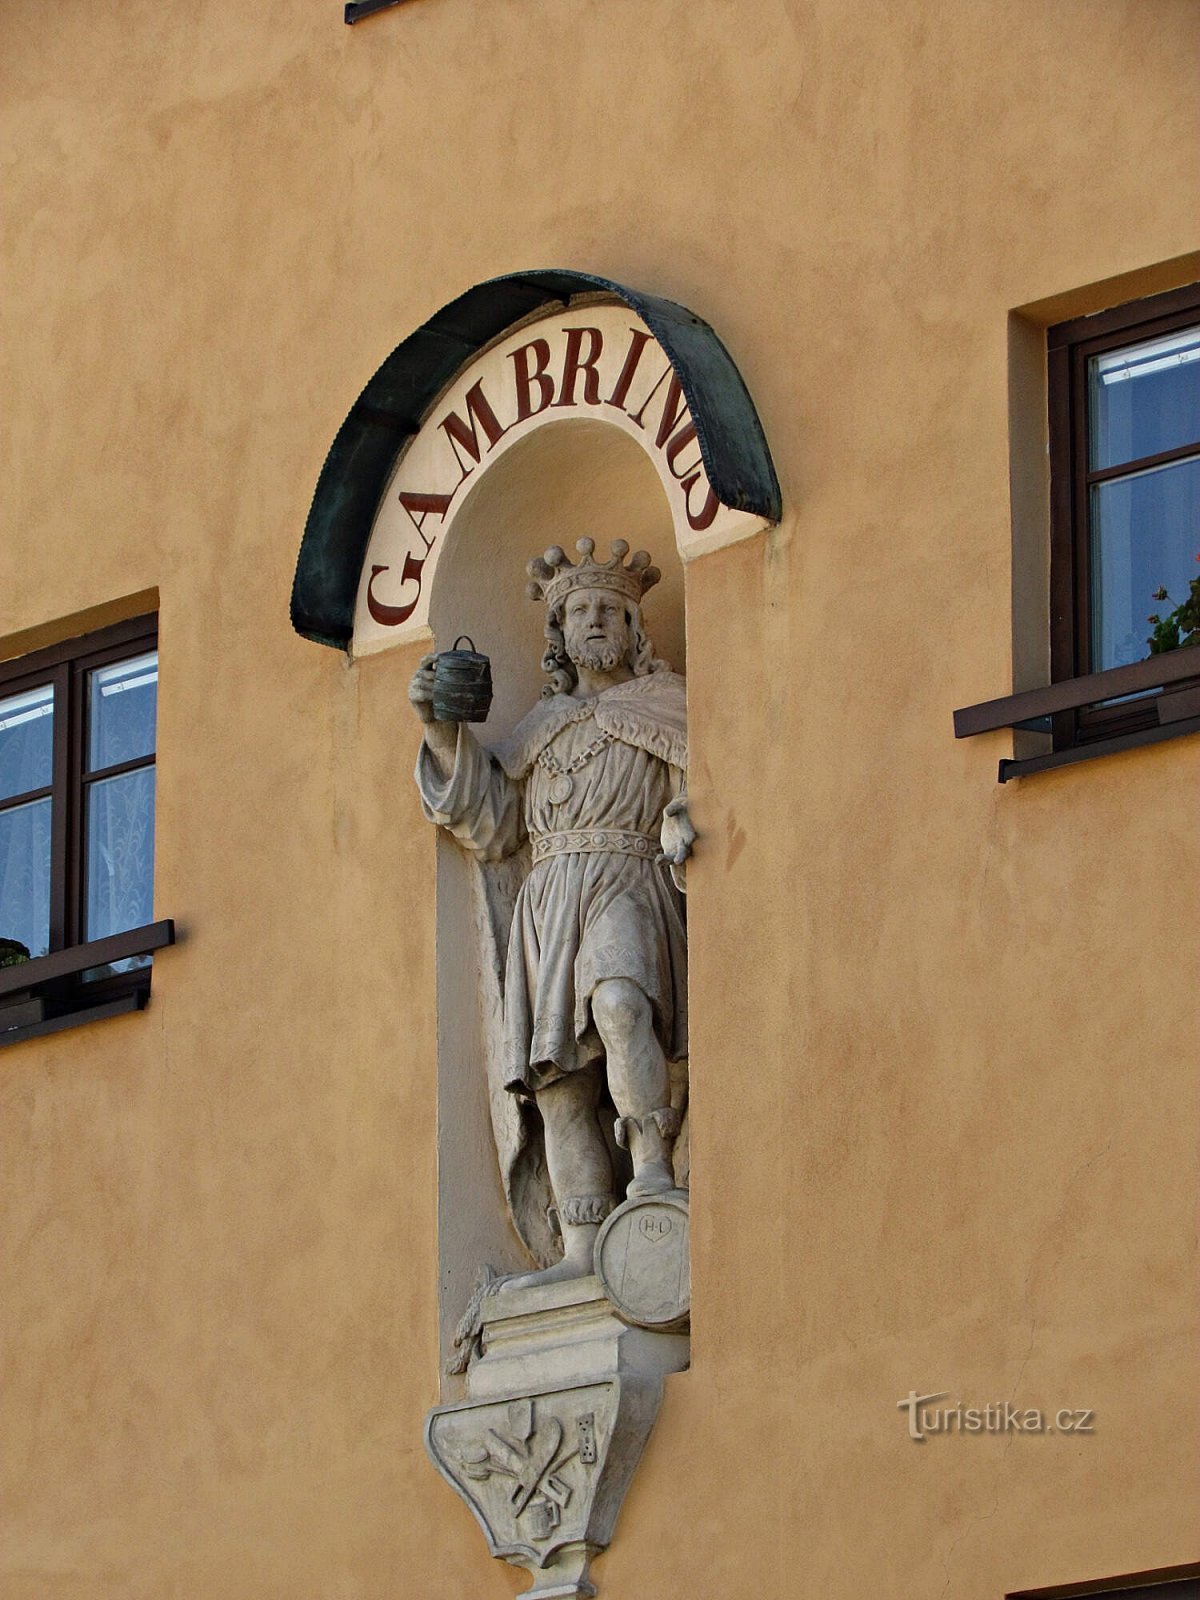 Brasserie Genius Noci à Lomnica et la statue de Gambrinus